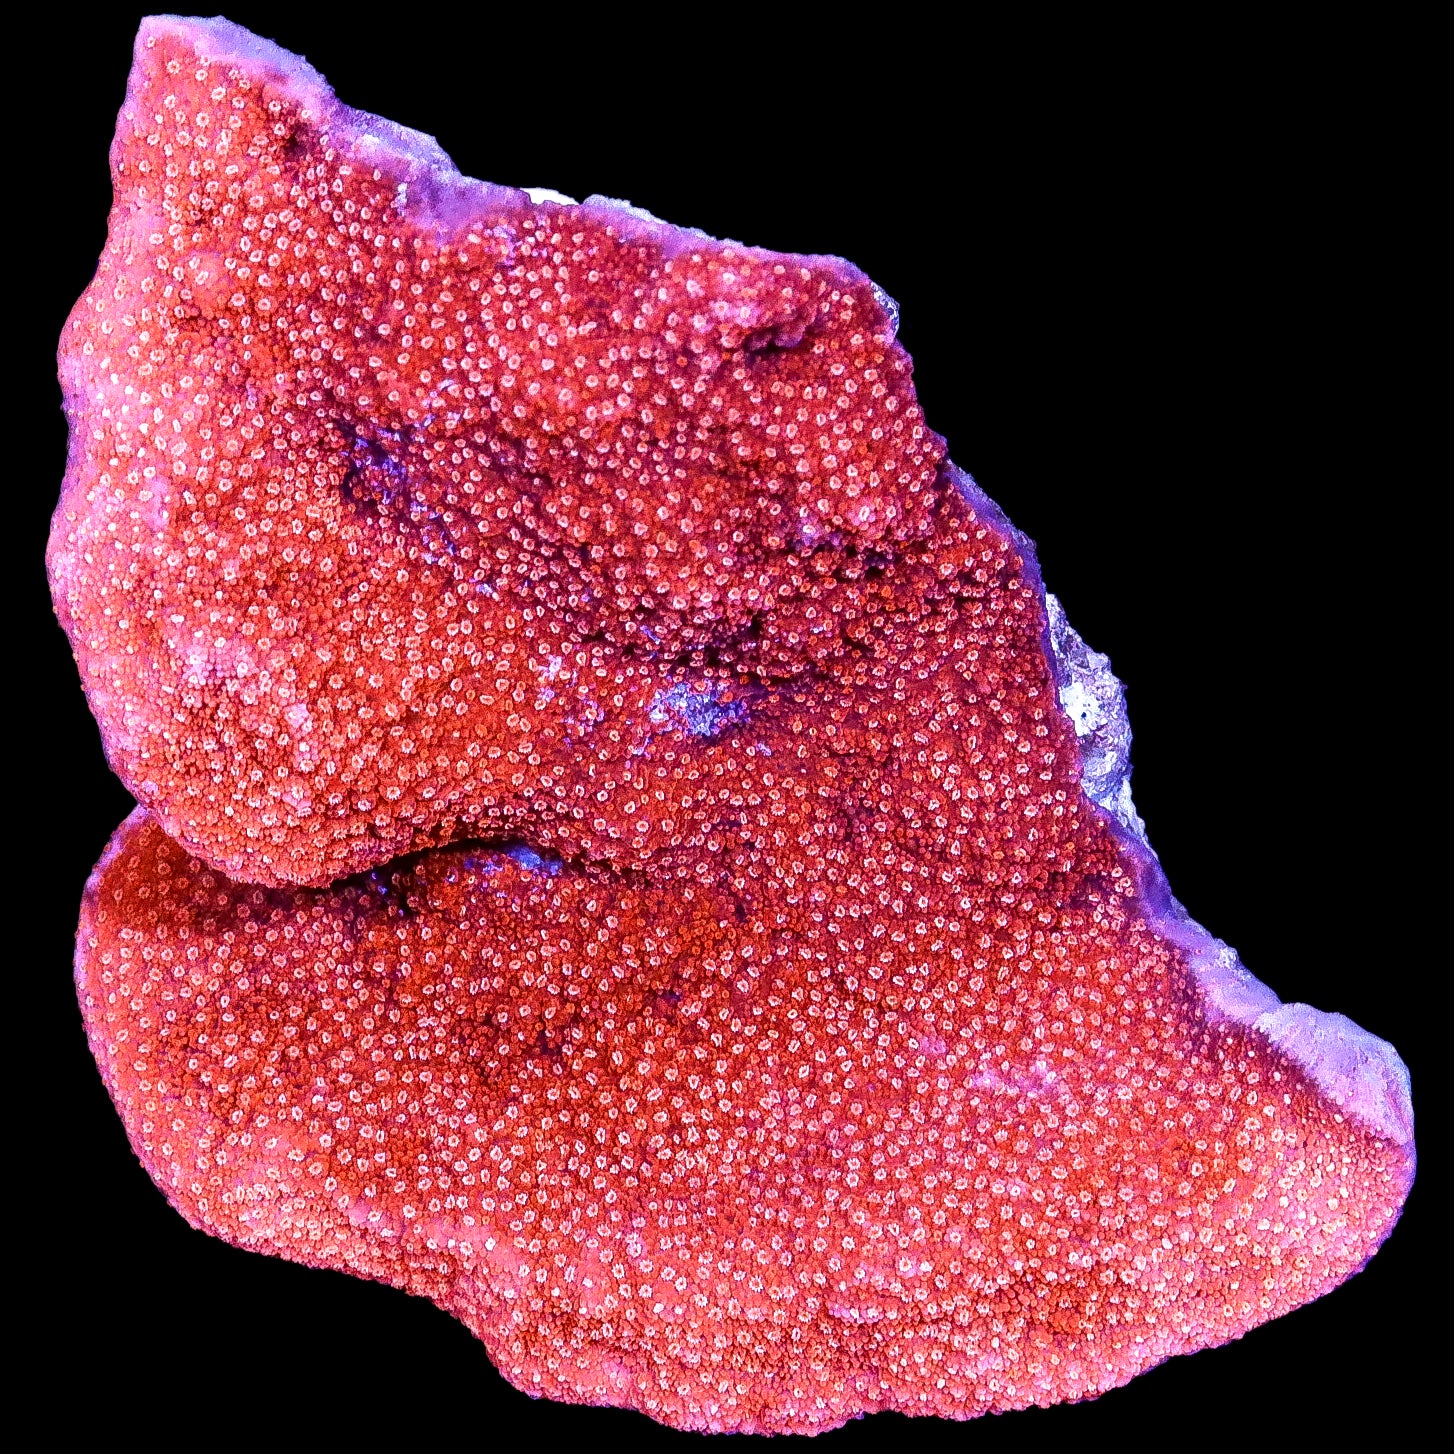 Ulttra Red Aussie Montipora Coral Colony